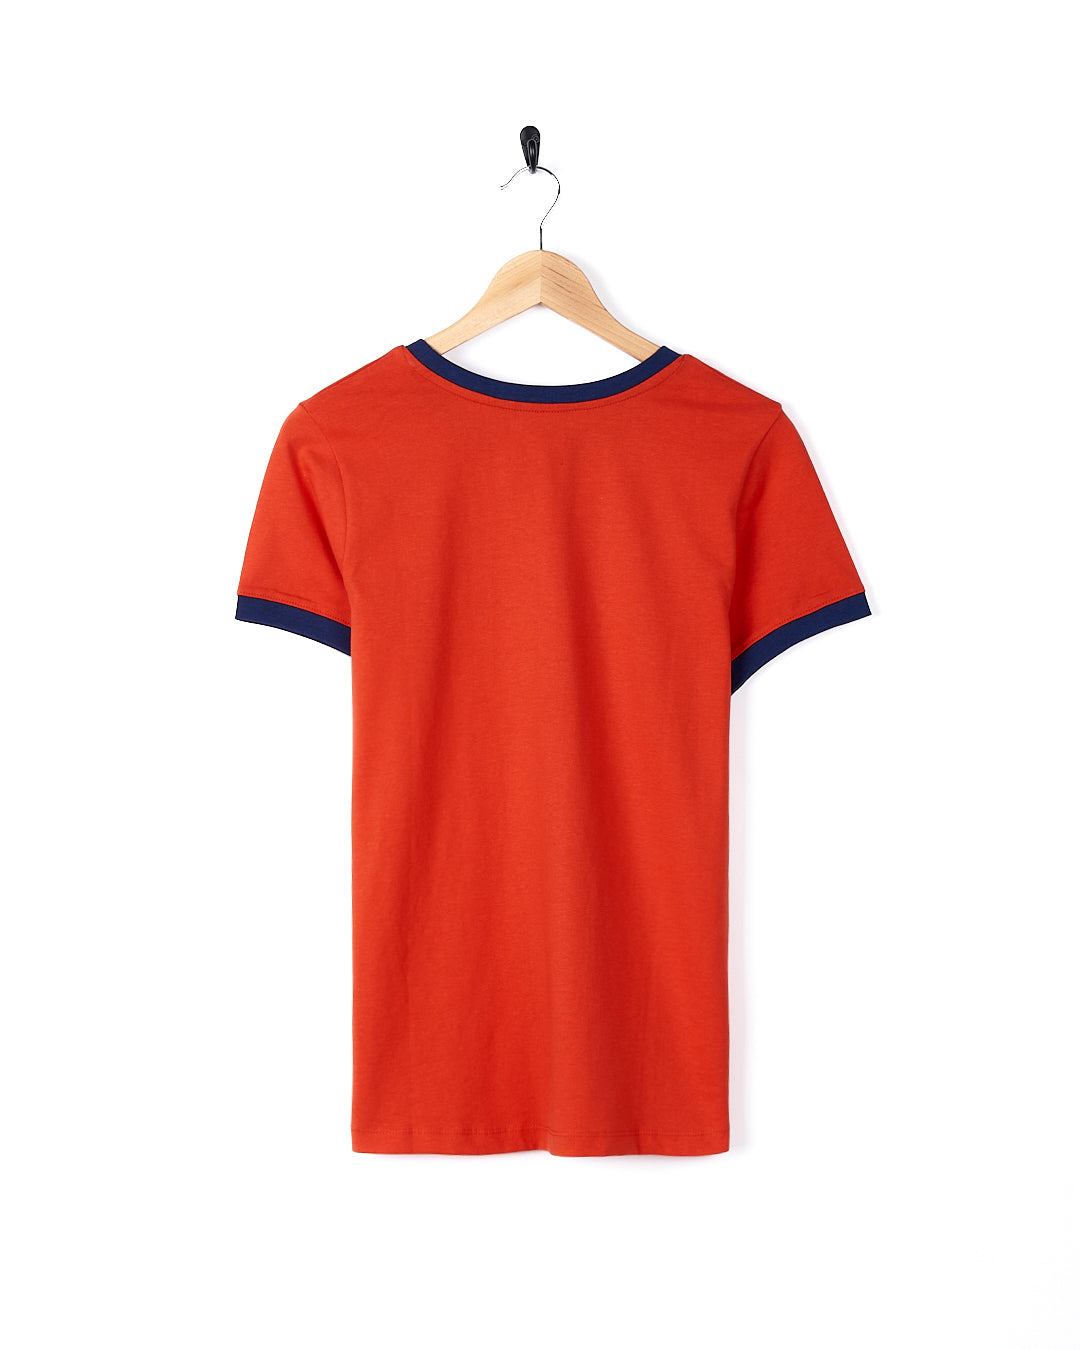 Retro Wave Mini - Womens Short Sleeve T-Shirt - Red